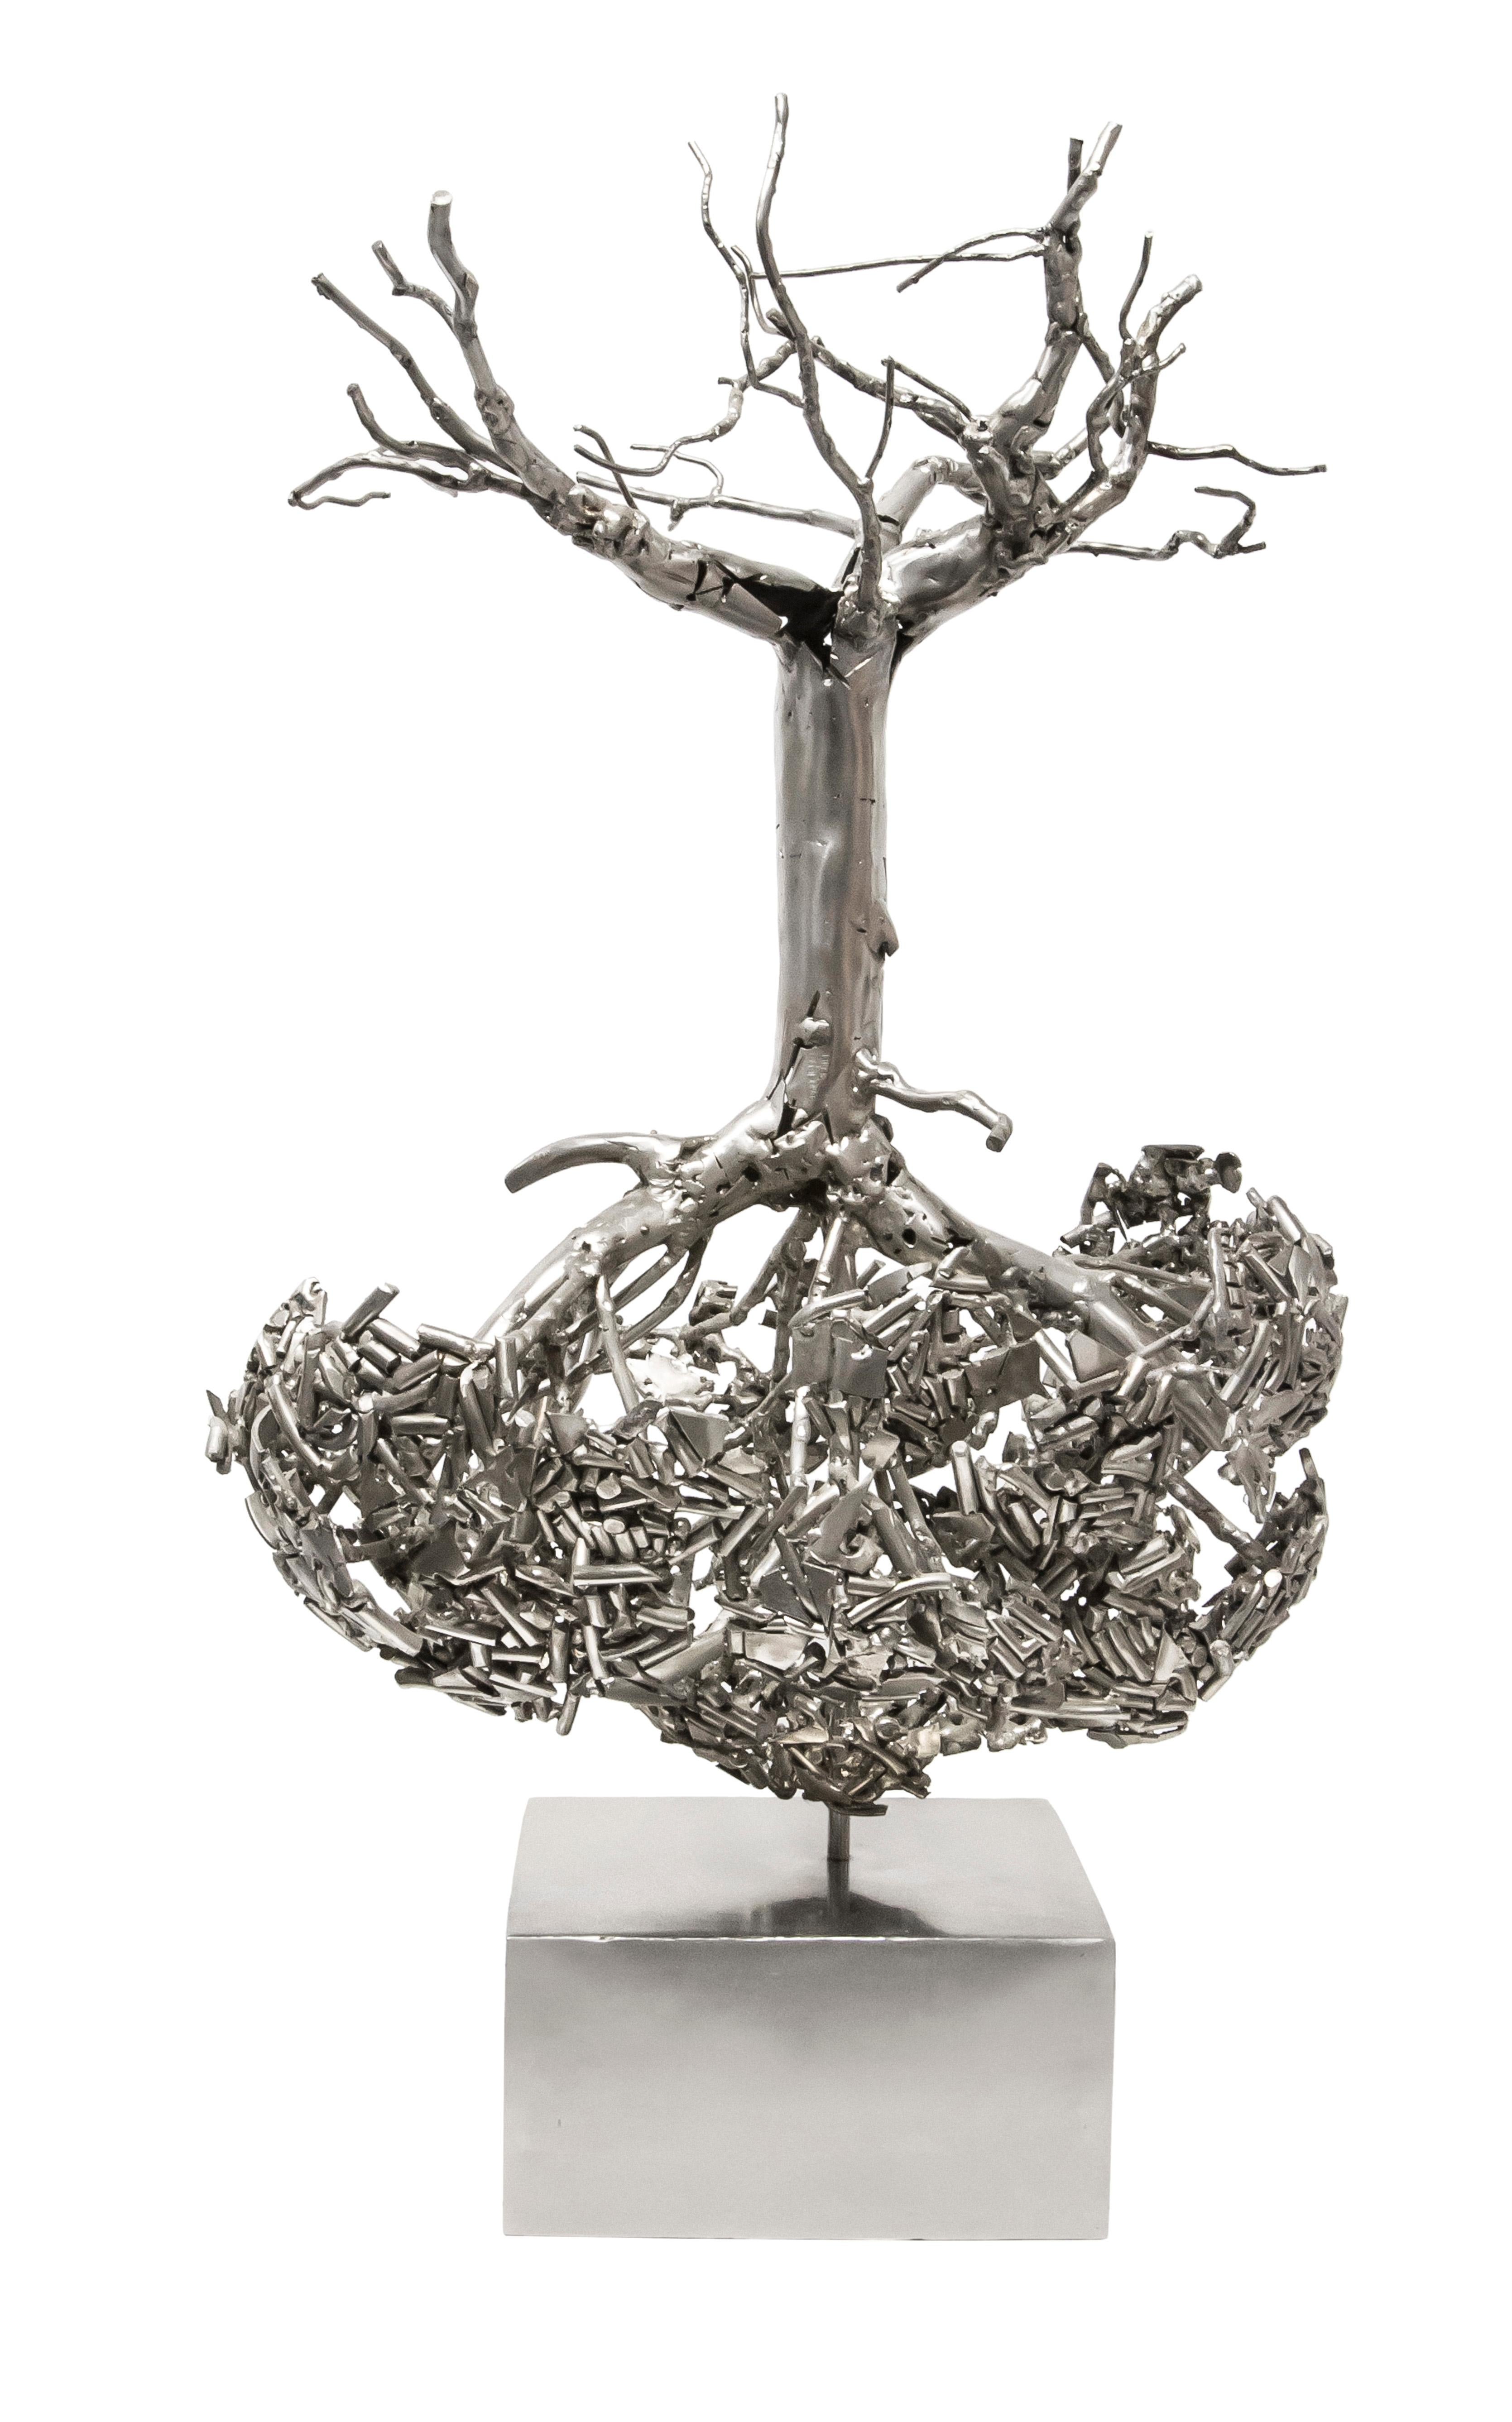 Figurative Sculpture Jordi Díez Fernández - Invertido rbol - 21e siècle, contemporain, sculpture figurative, acier, arbre